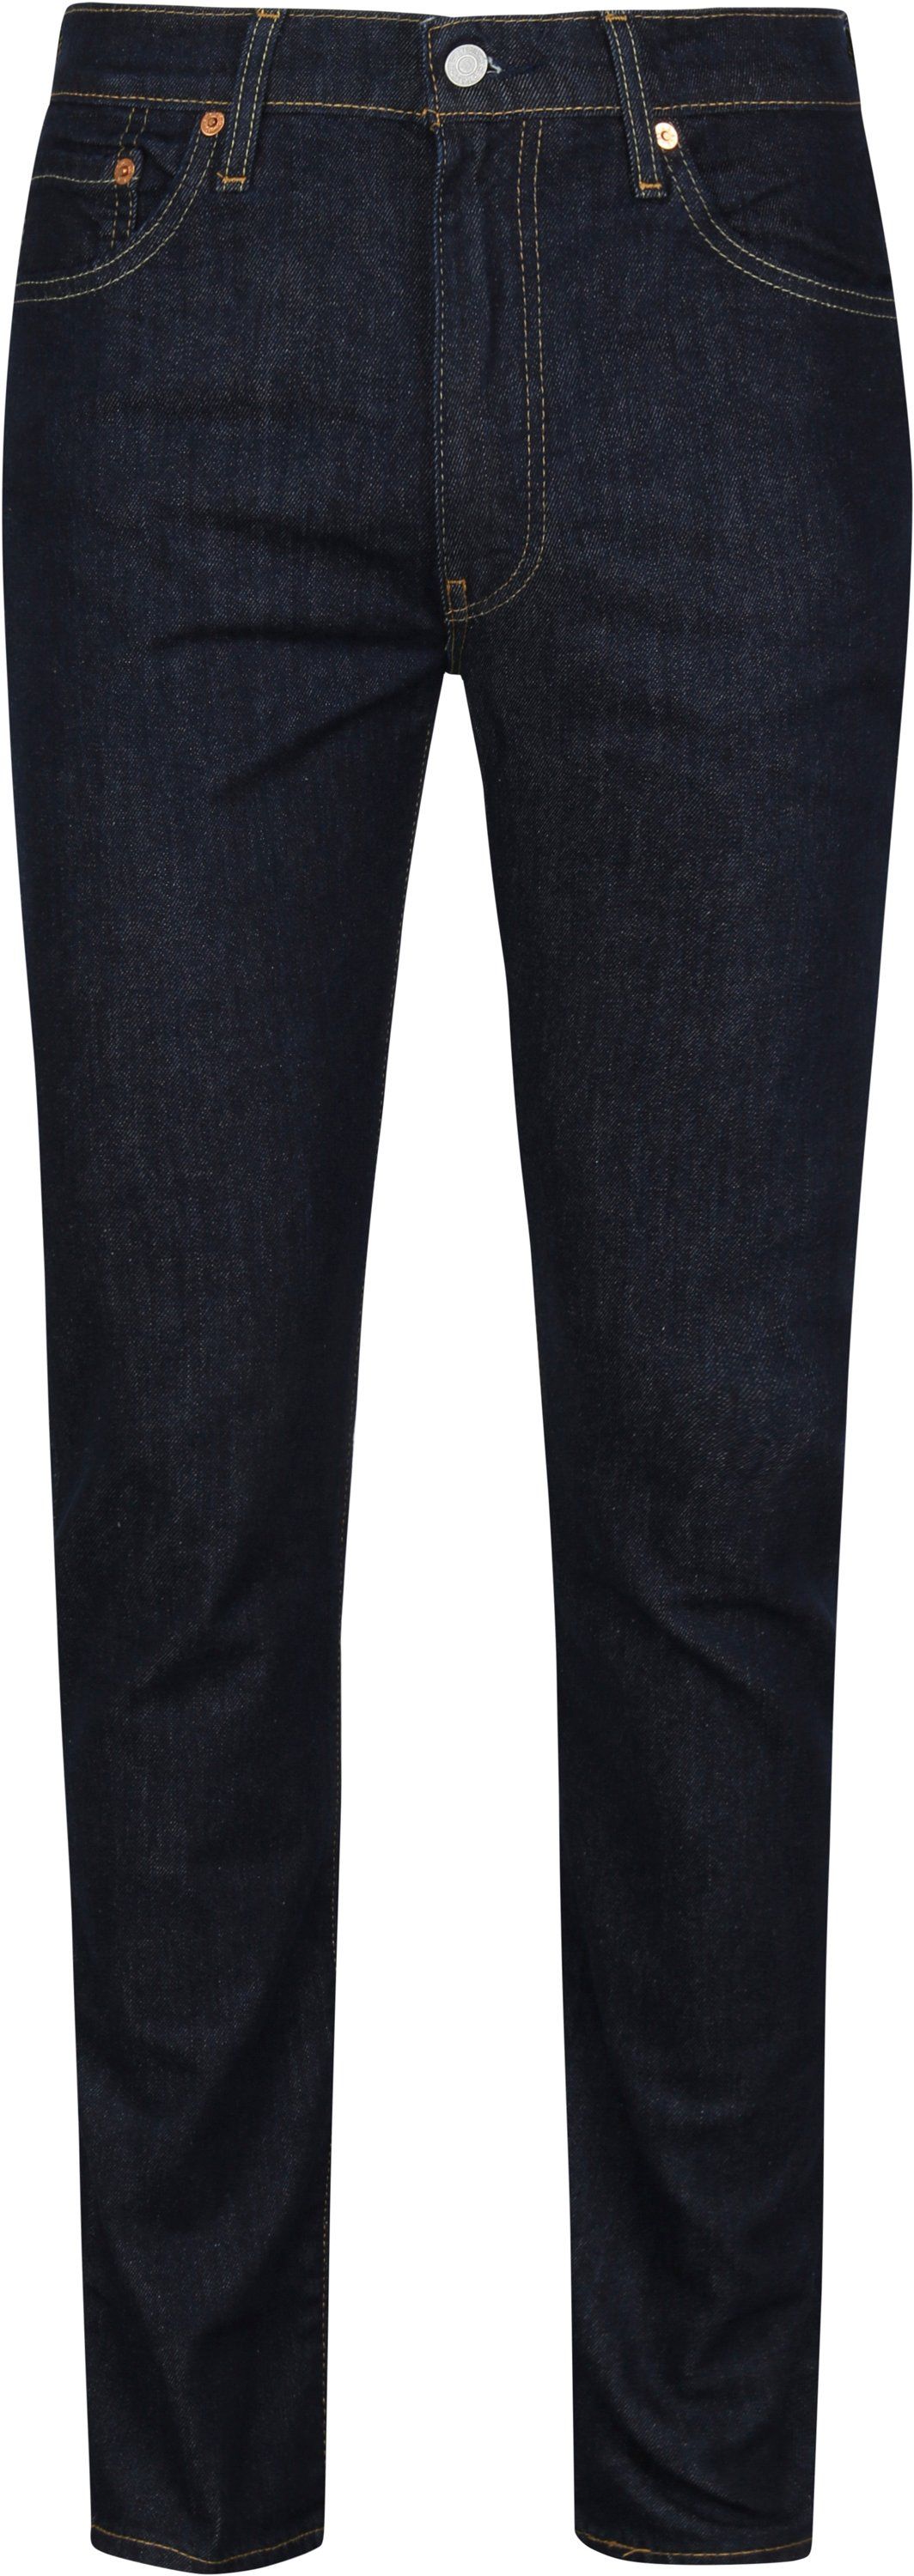 Levi's 511 Denim Jeans Dark Blue Dark Blue size W 30